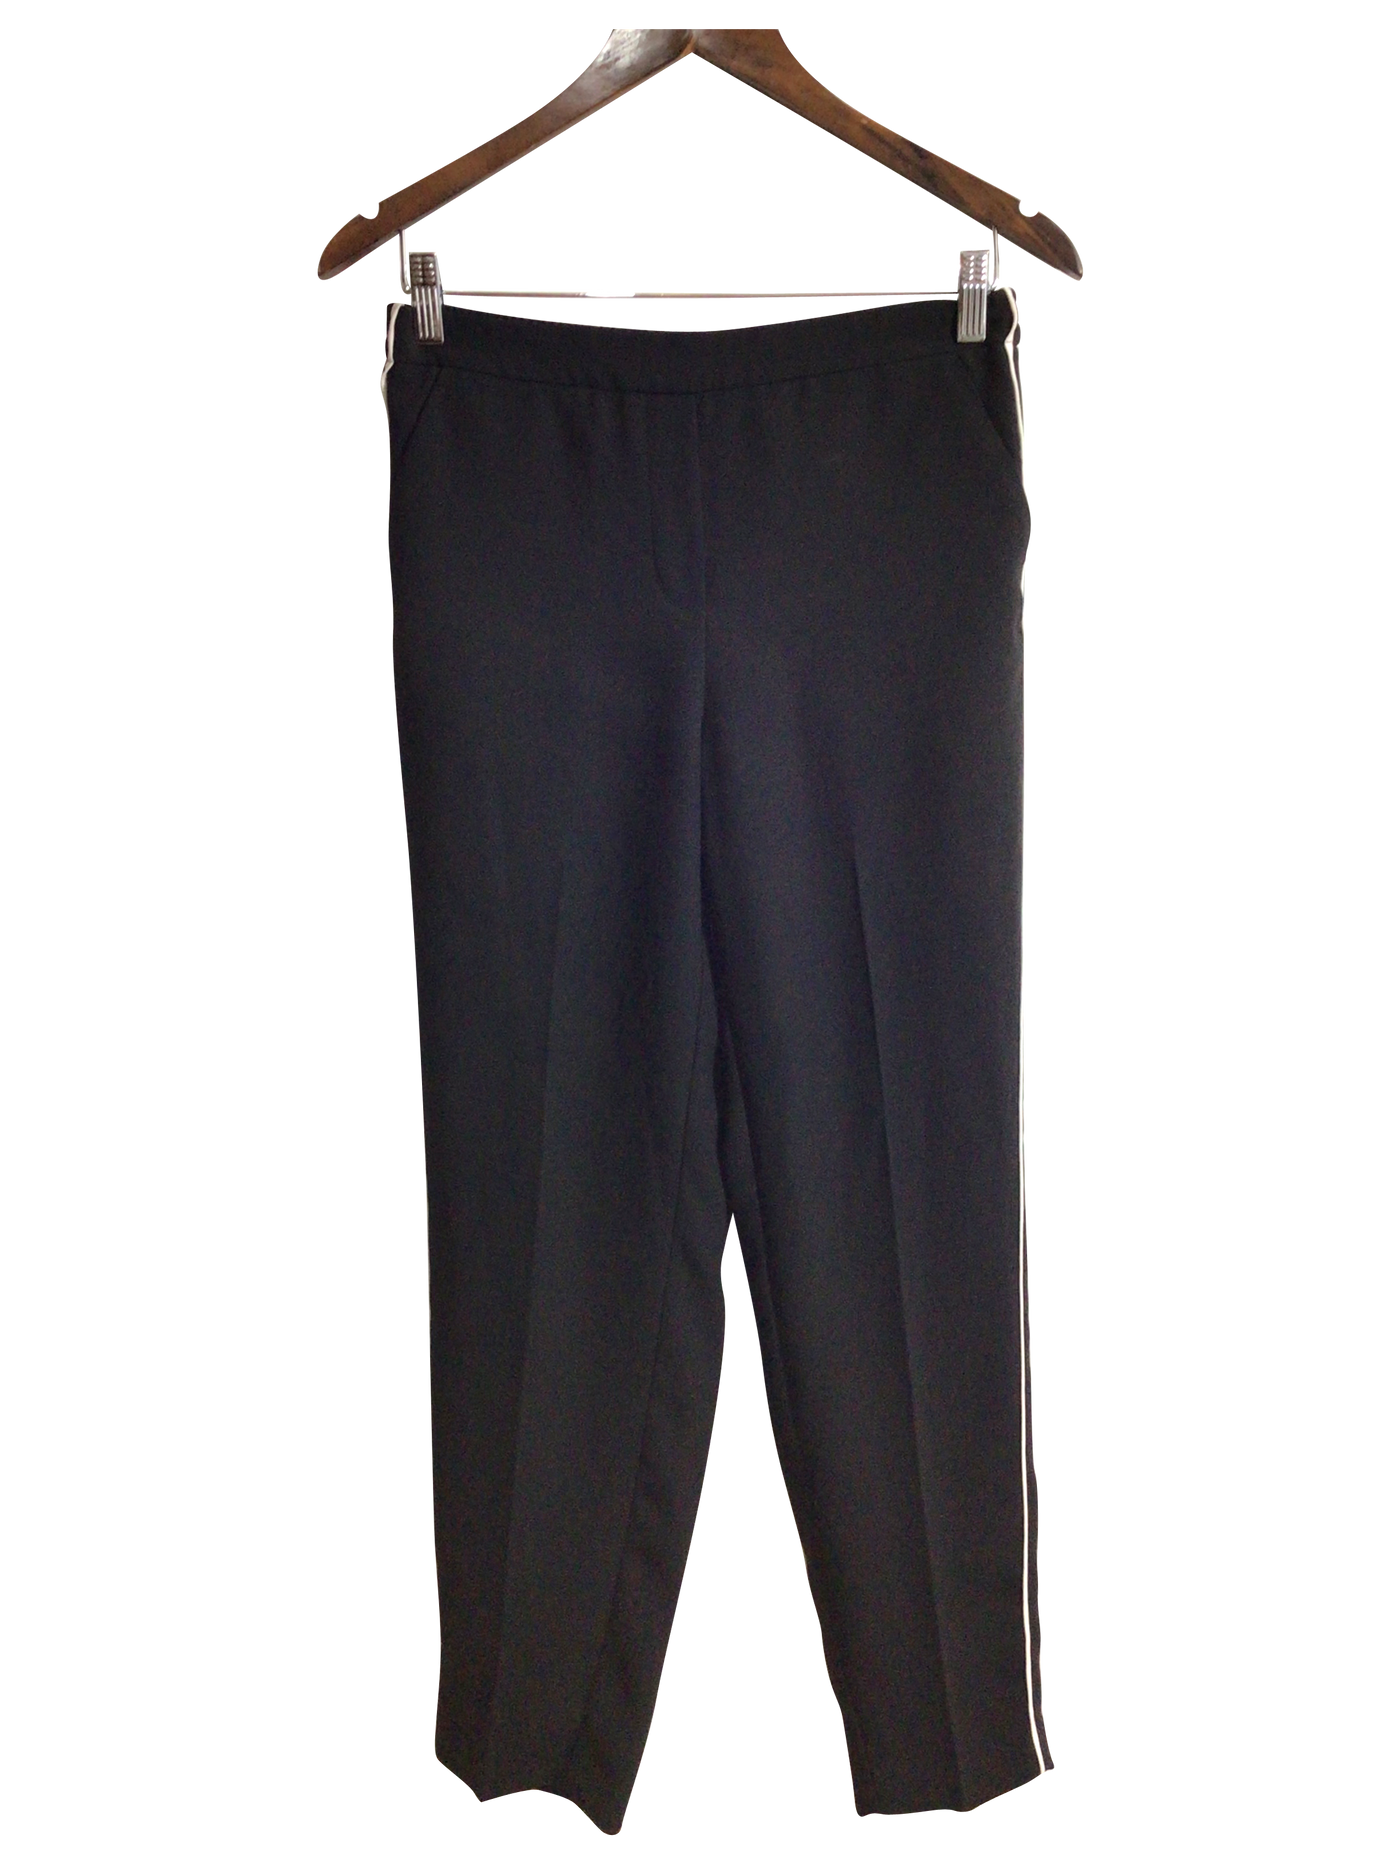 CAMBER & GRACE Women Work Pants Regular fit in Black - Size S | 15 $ KOOP